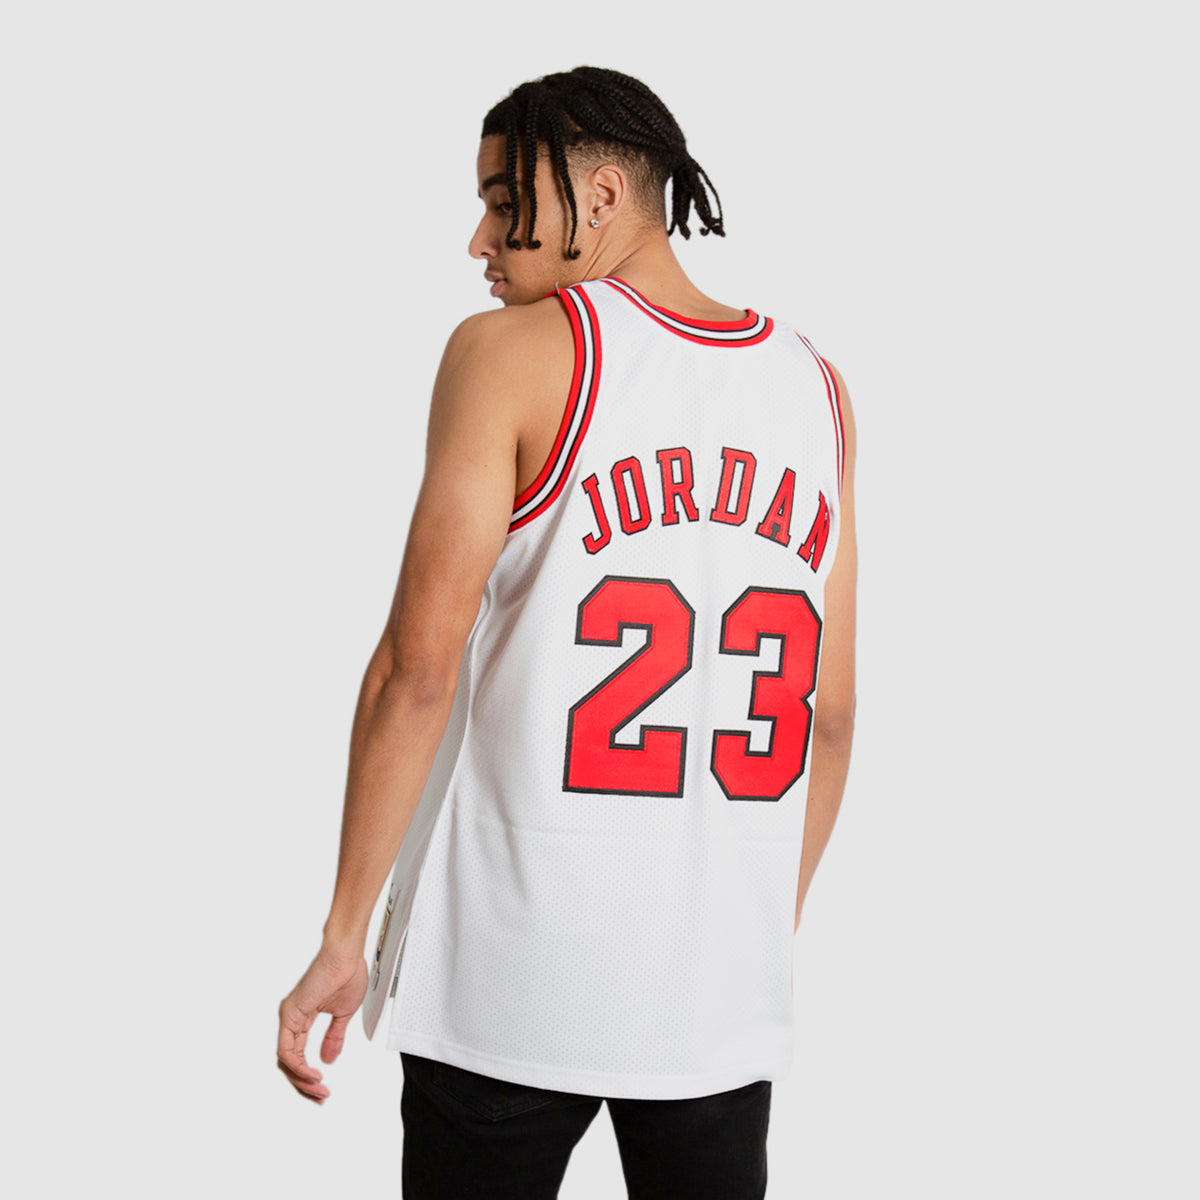 Authentic Jersey Chicago Bulls 1995-96 Michael Jordan - Shop